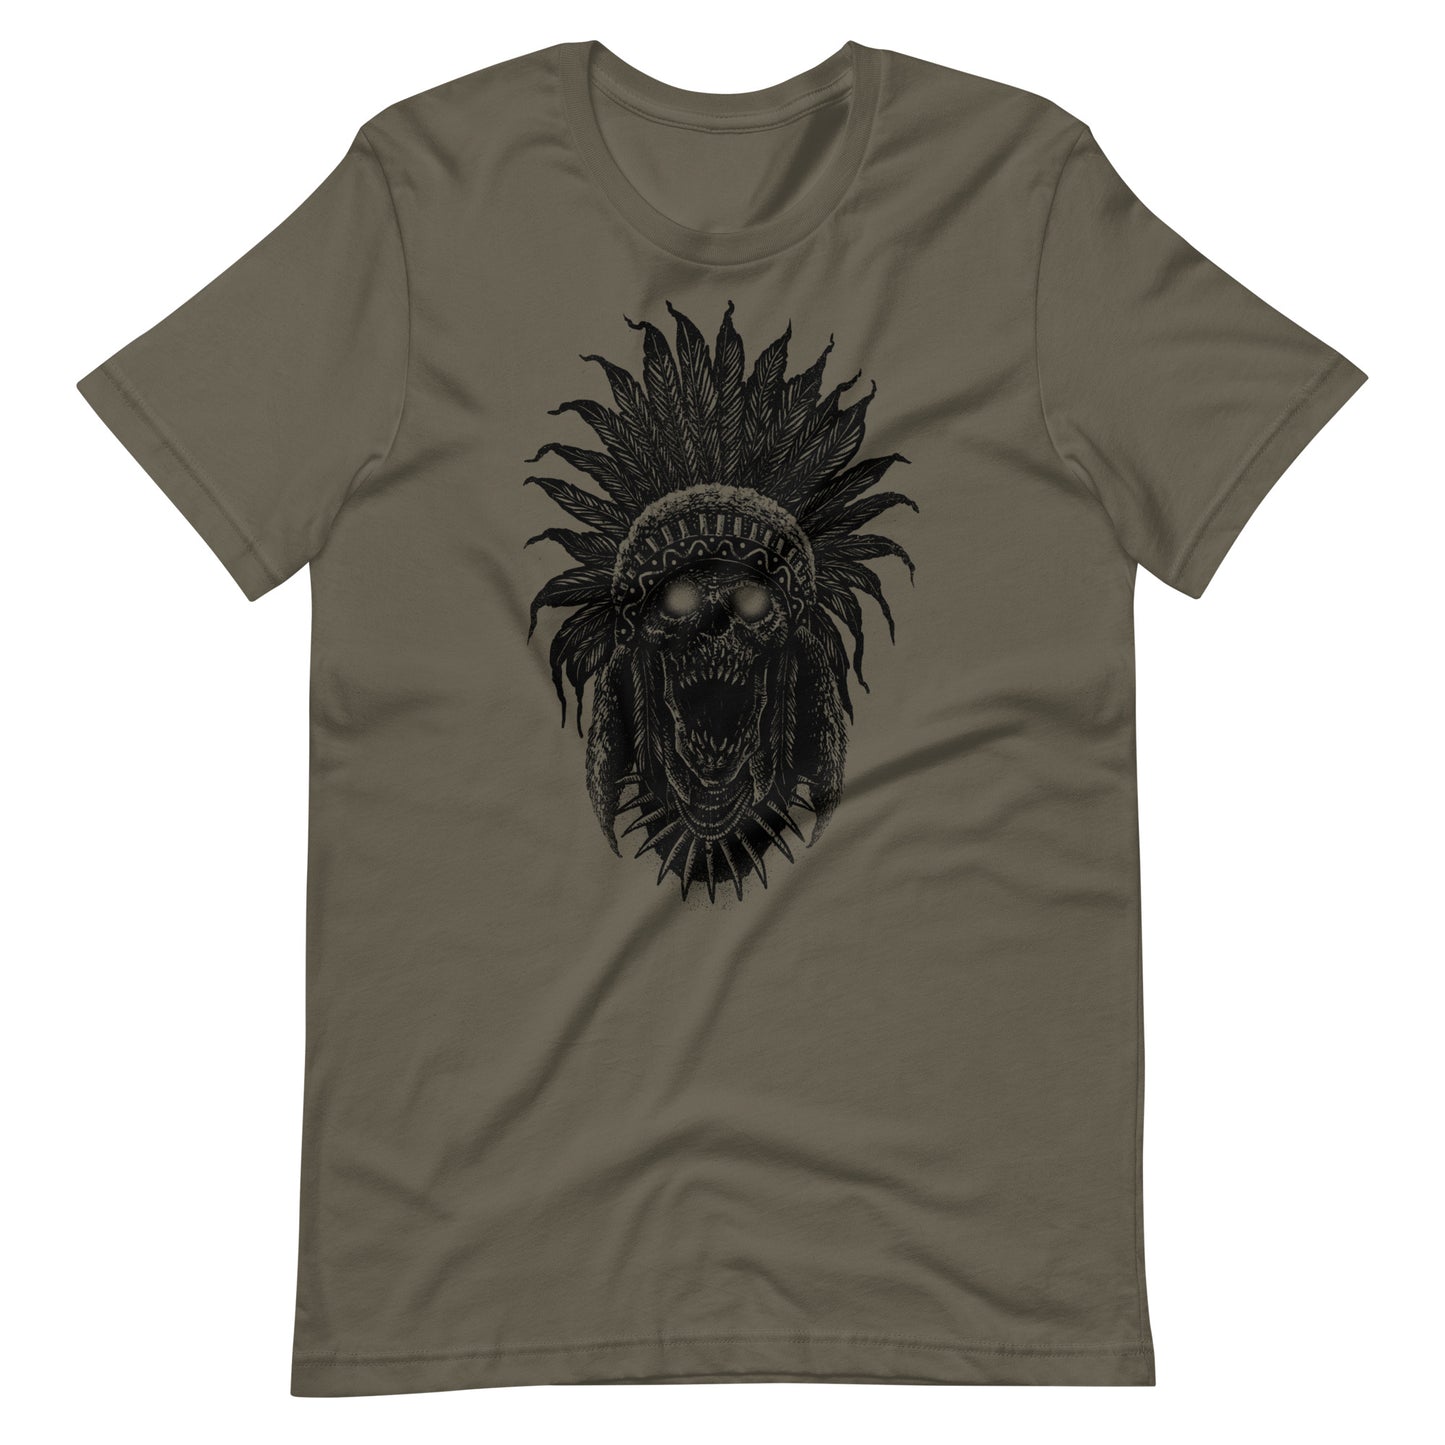 Tribe Skull Black - Men's t-shirt - Army Front